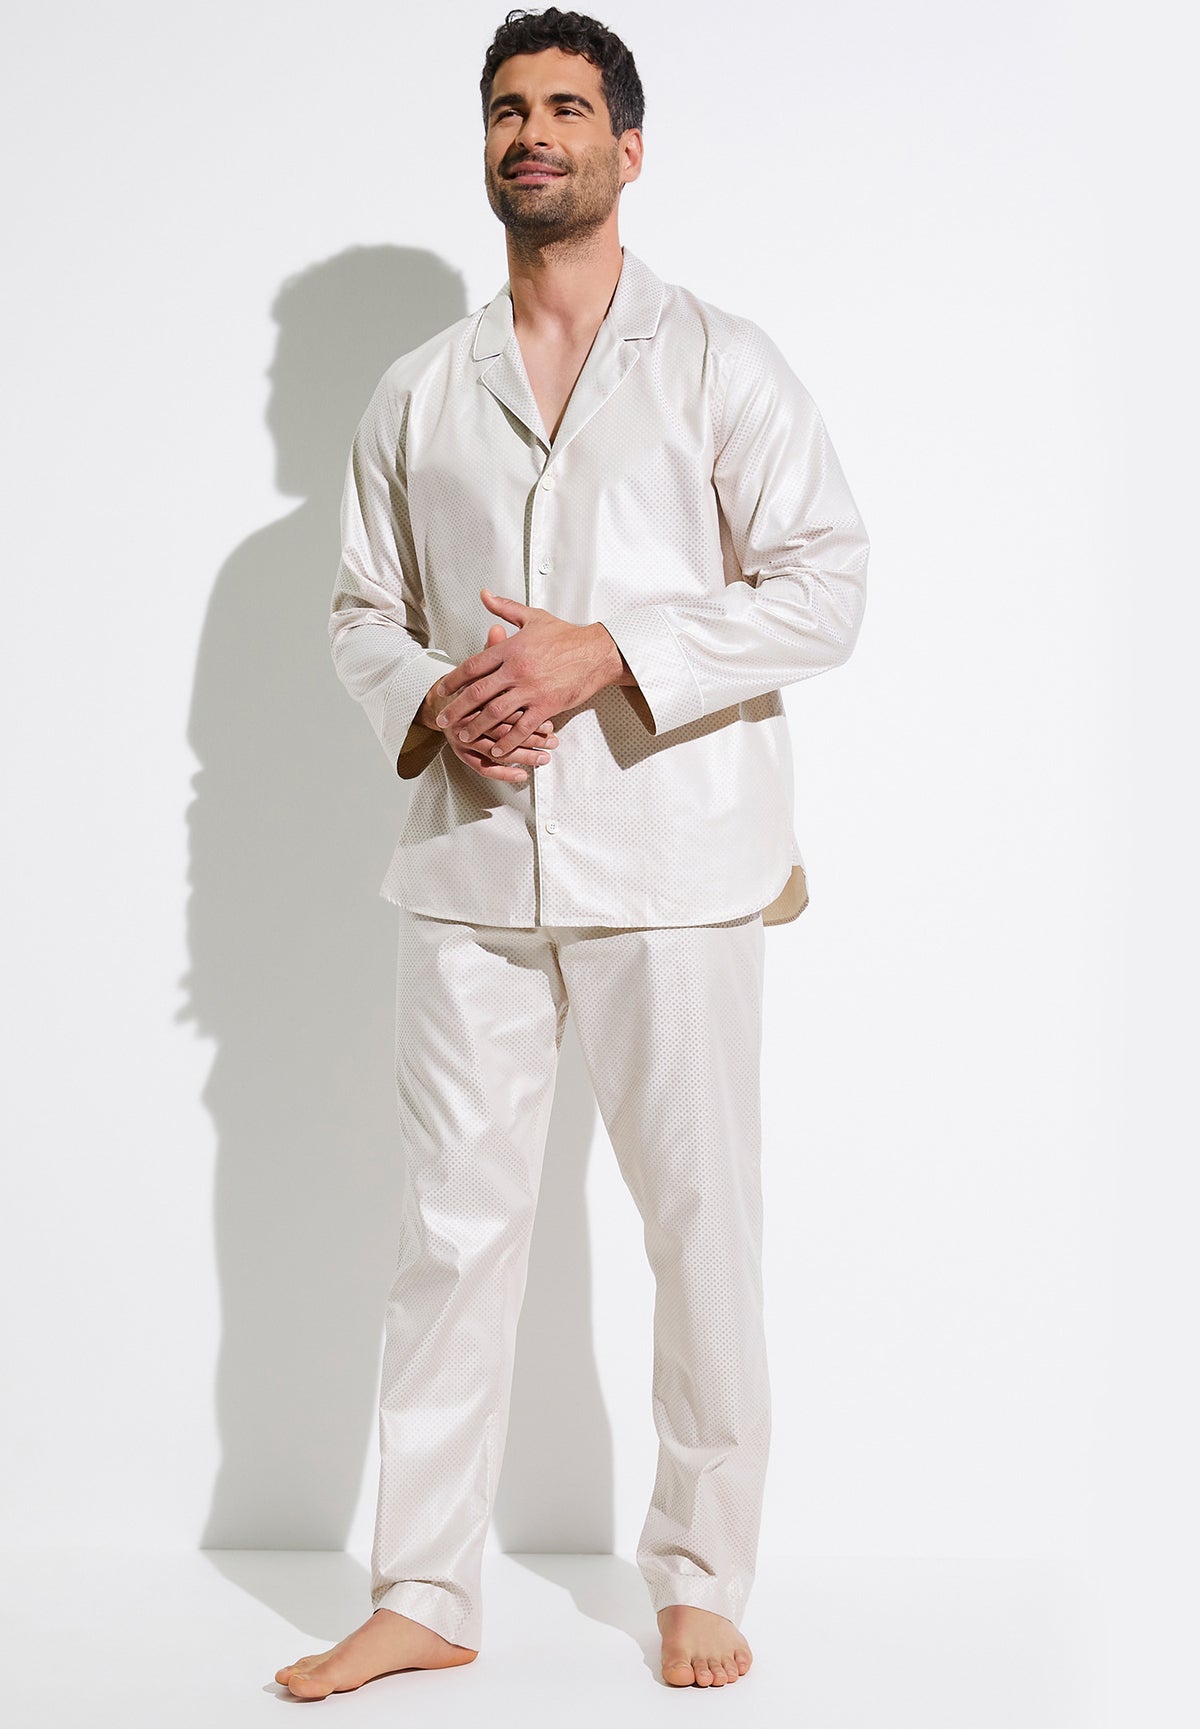 Zimmerli Textil Ag Luxury Jacquard Pyjama Long